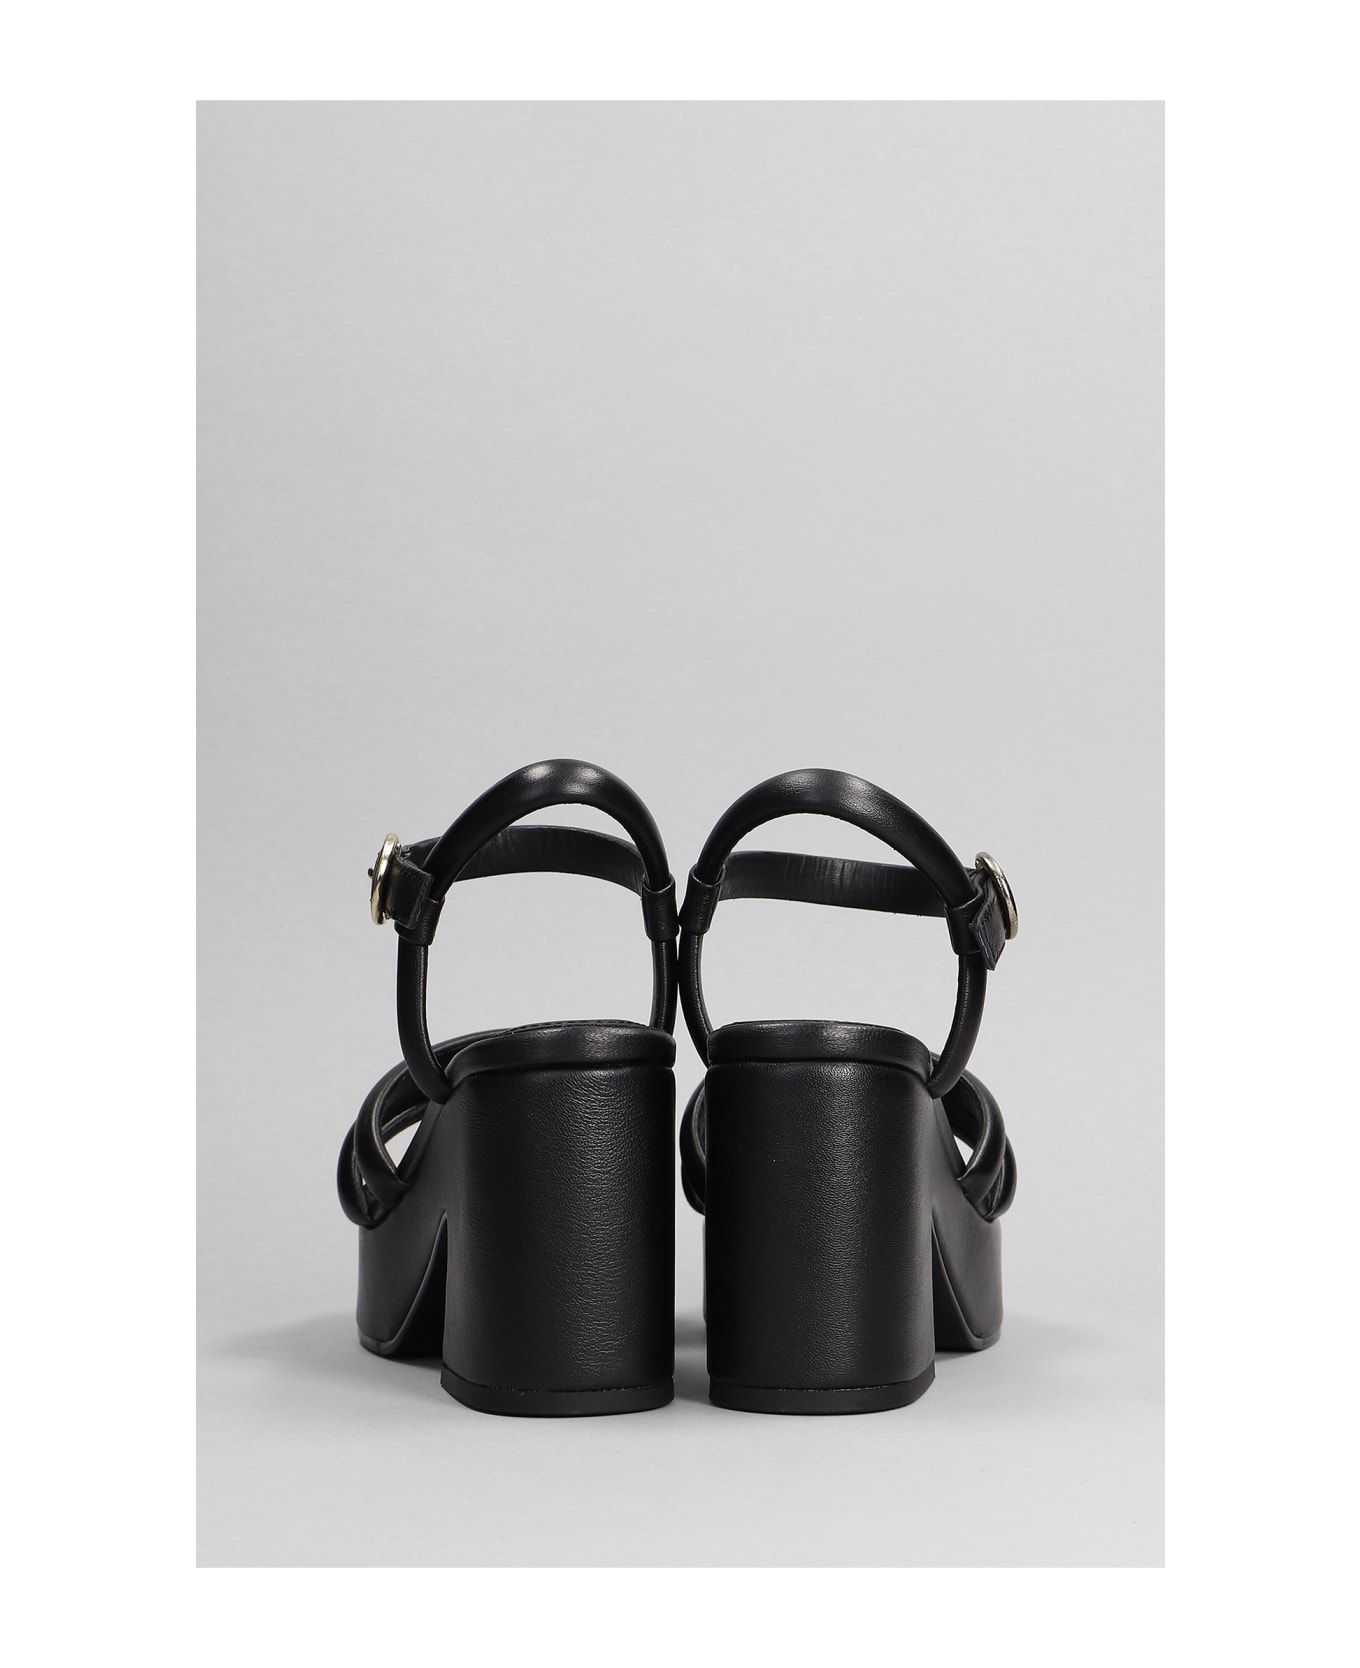 Ash Onyx Sandals In Black Leather - black サンダル